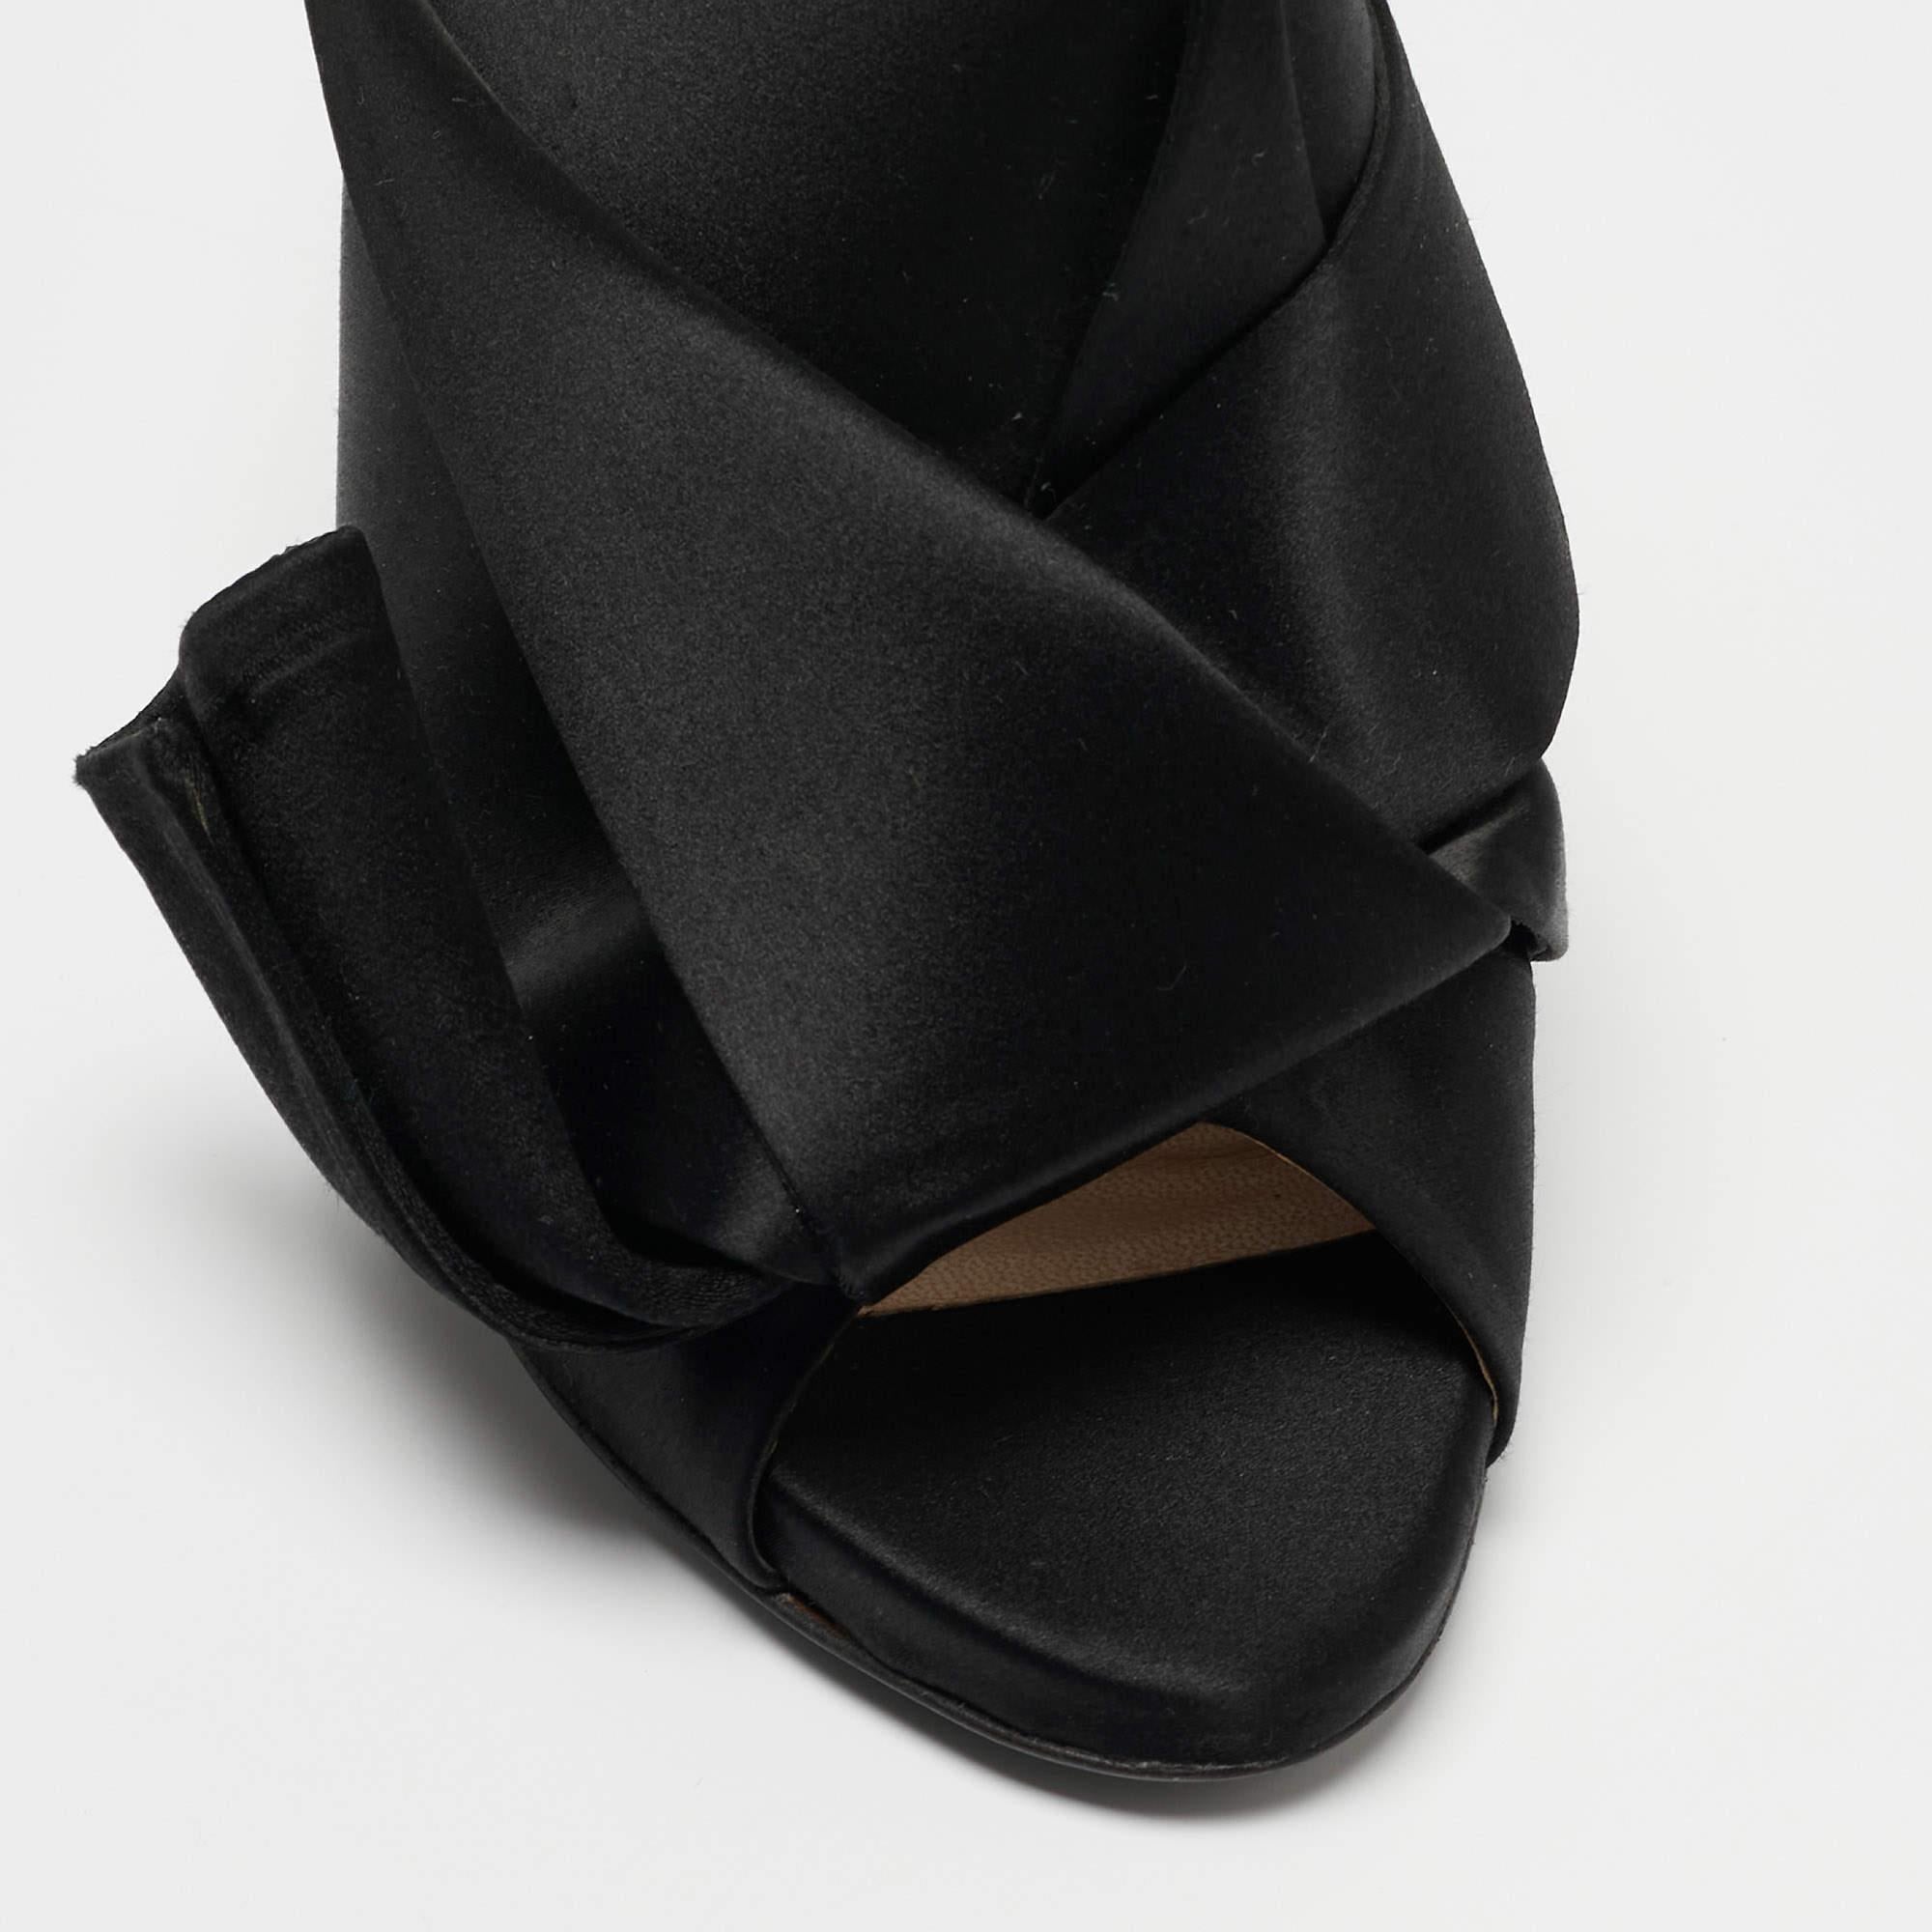 N21 Black Satin Knot Pointed Toe Slide Sandals Size 38 For Sale 1